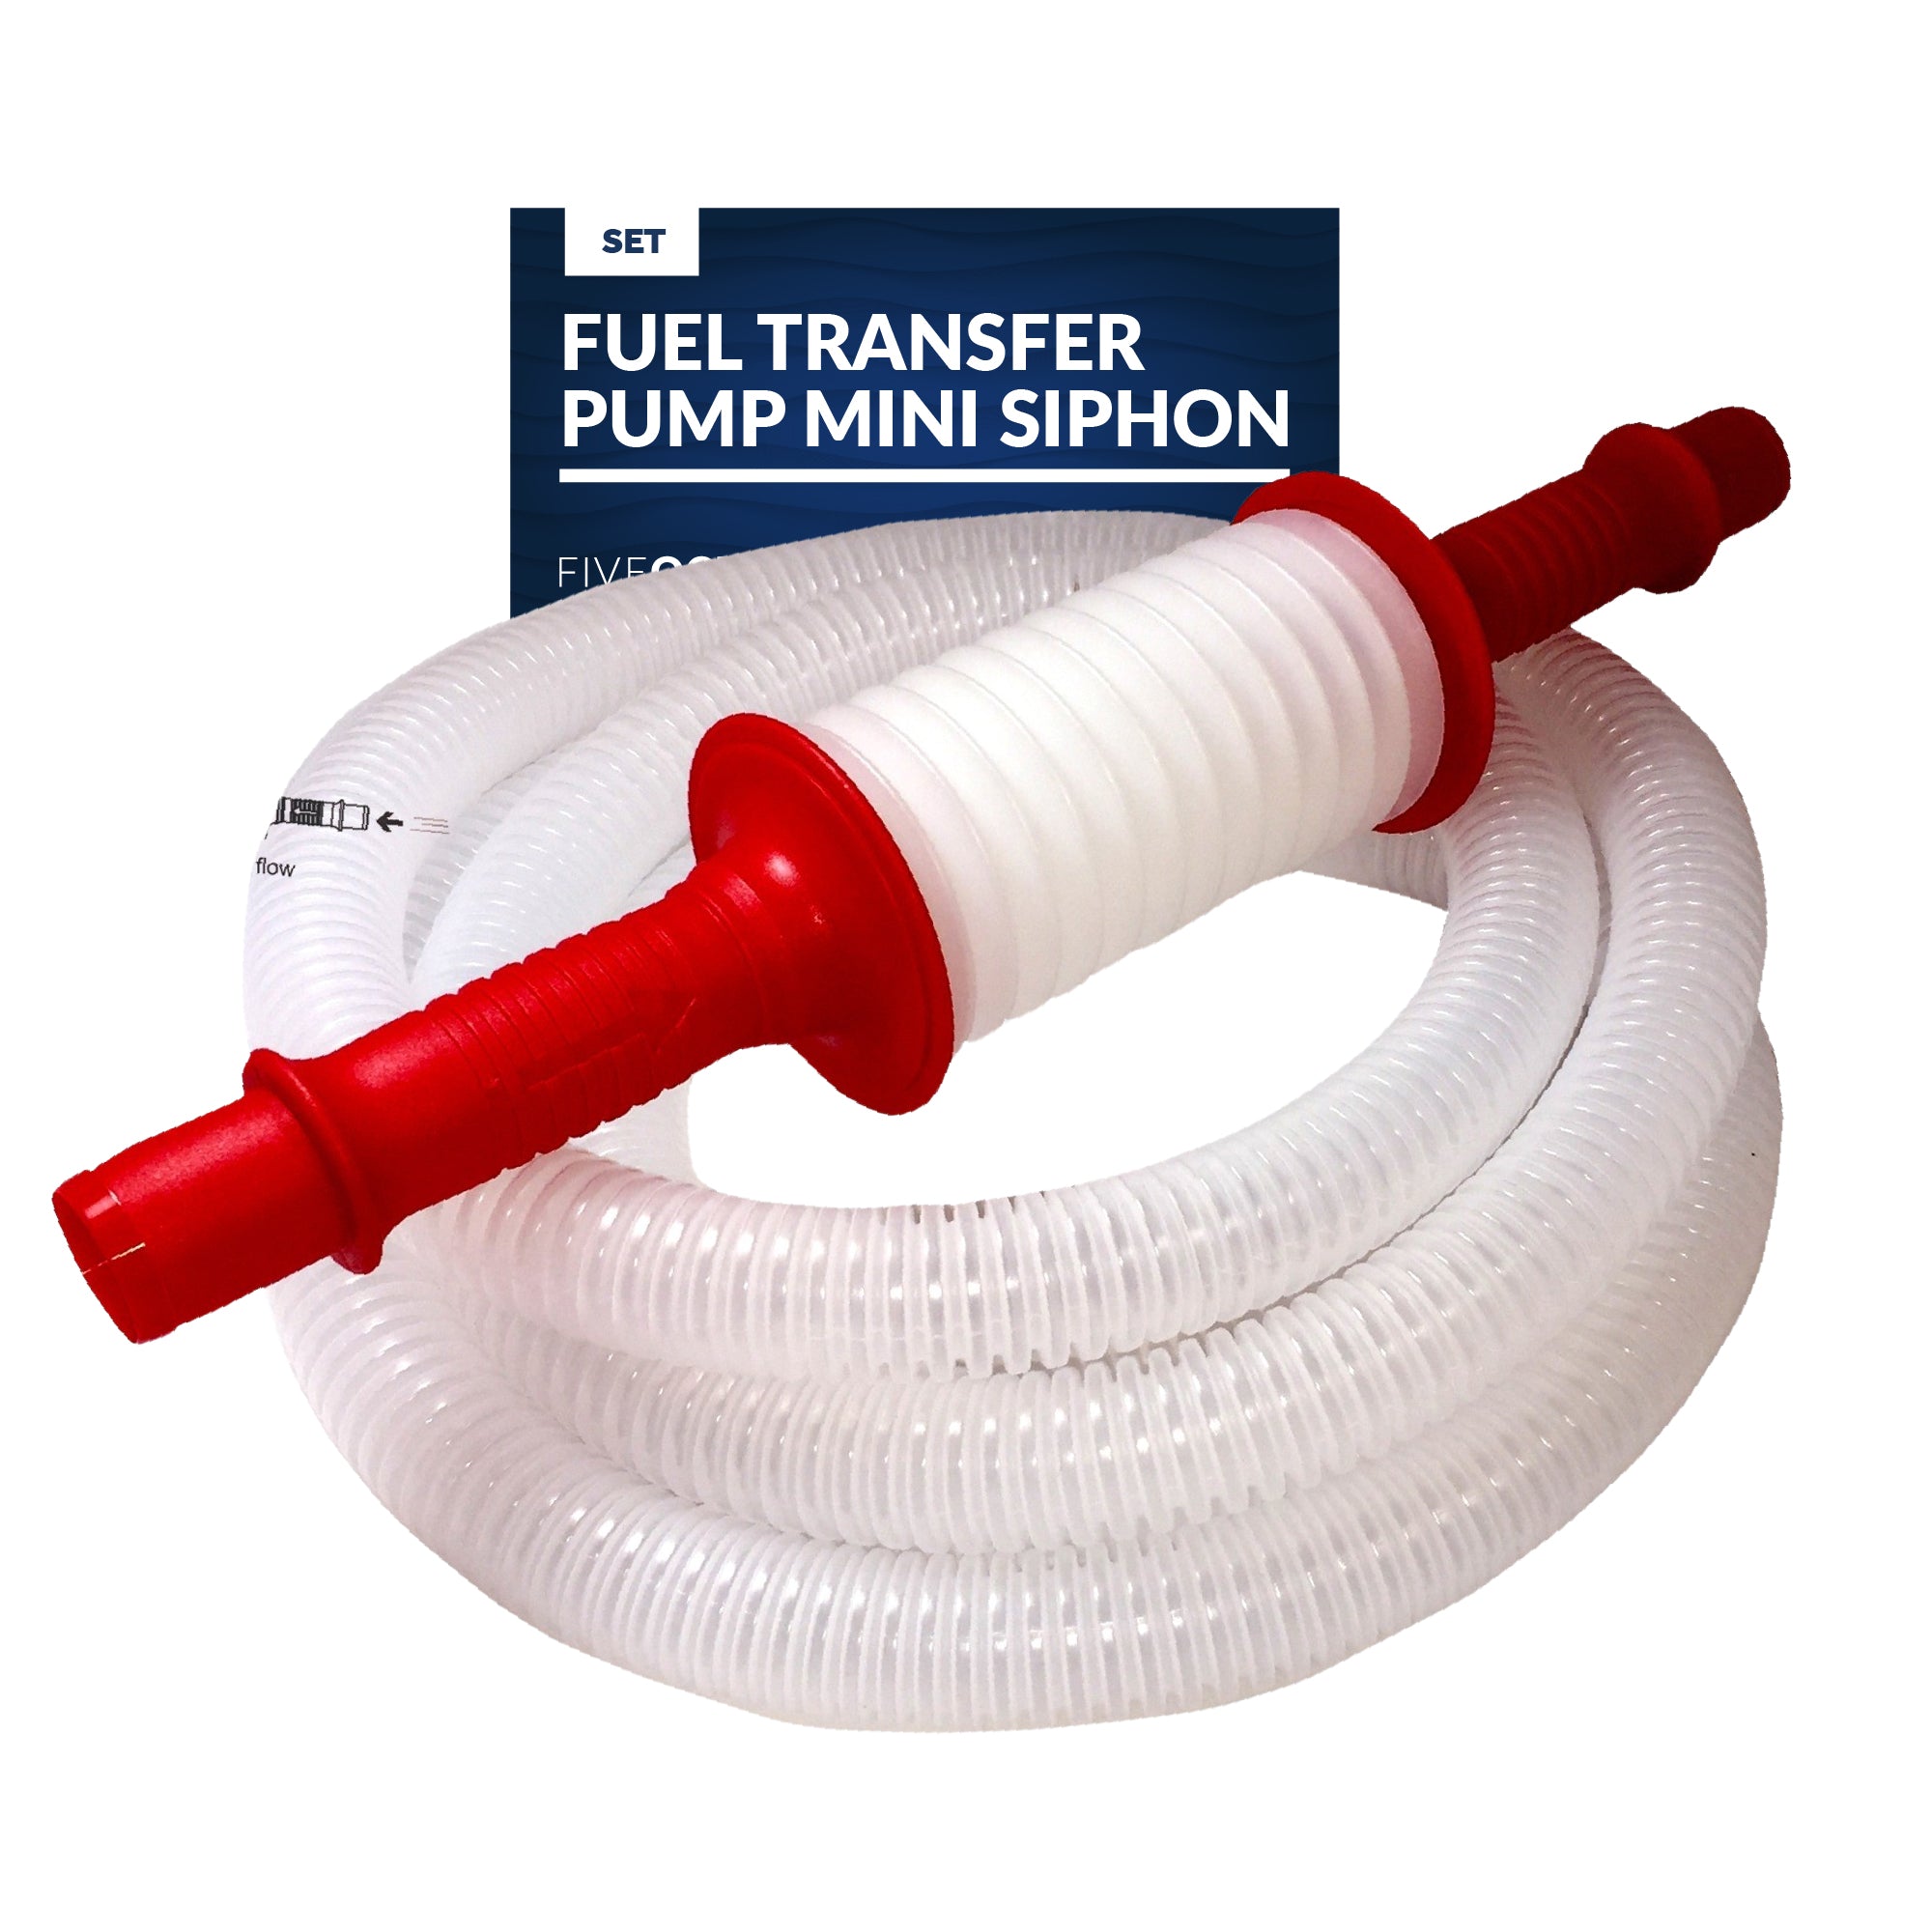 Fuel Transfer Pump Mini Siphon Manual Sucker Set - FO3890